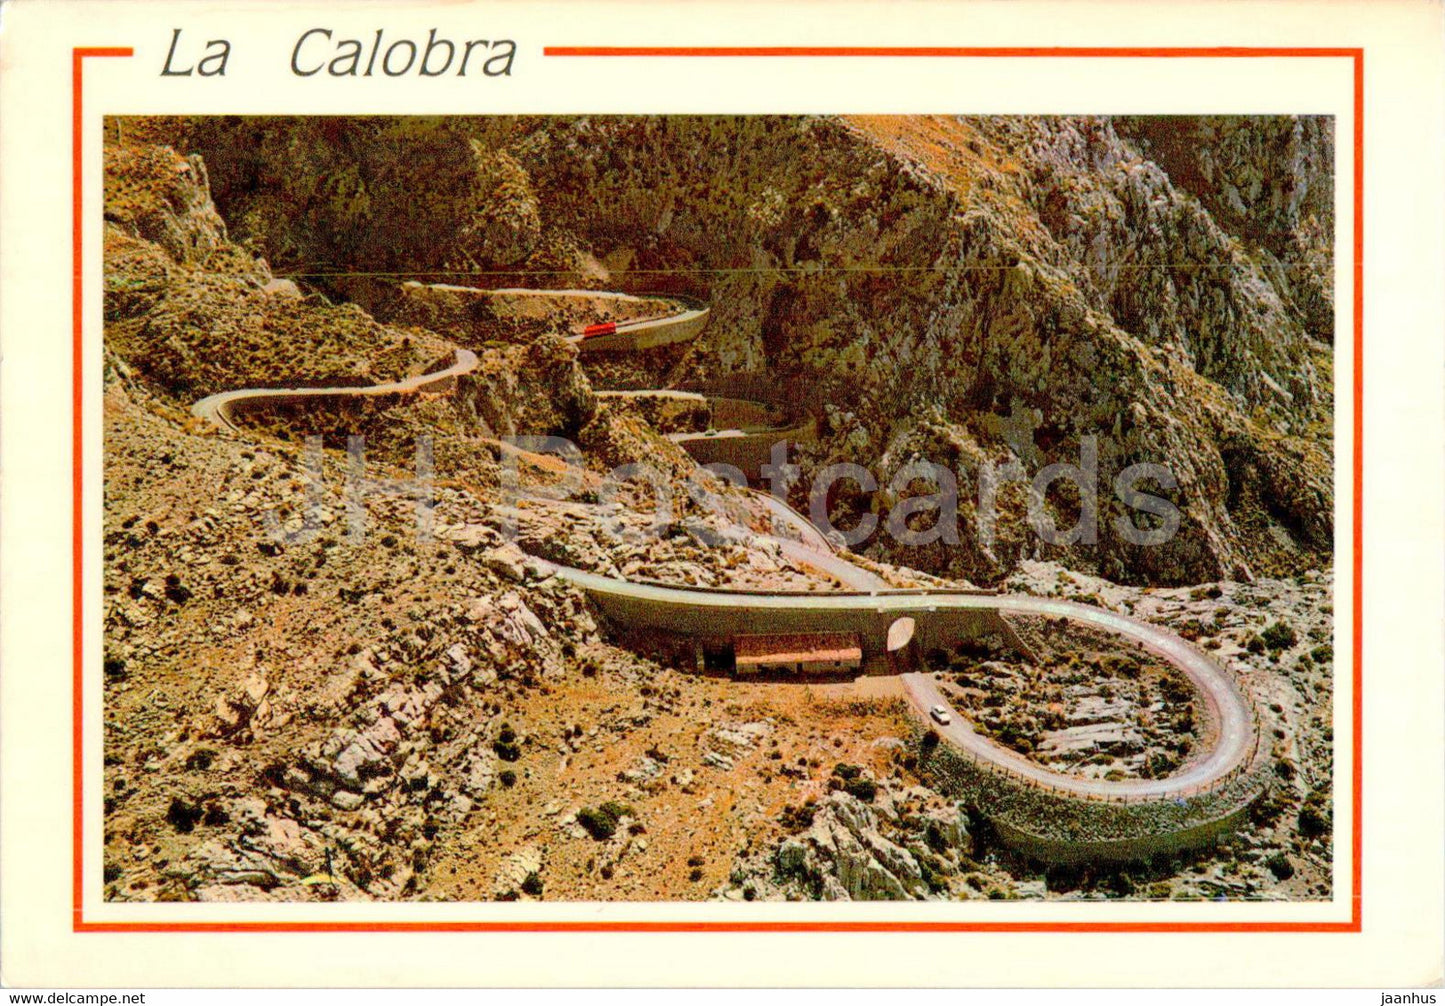 La Calobra - Detalle de su carretera - Vista Aerea - Mallorca - 2505 - Spain - unused - JH Postcards